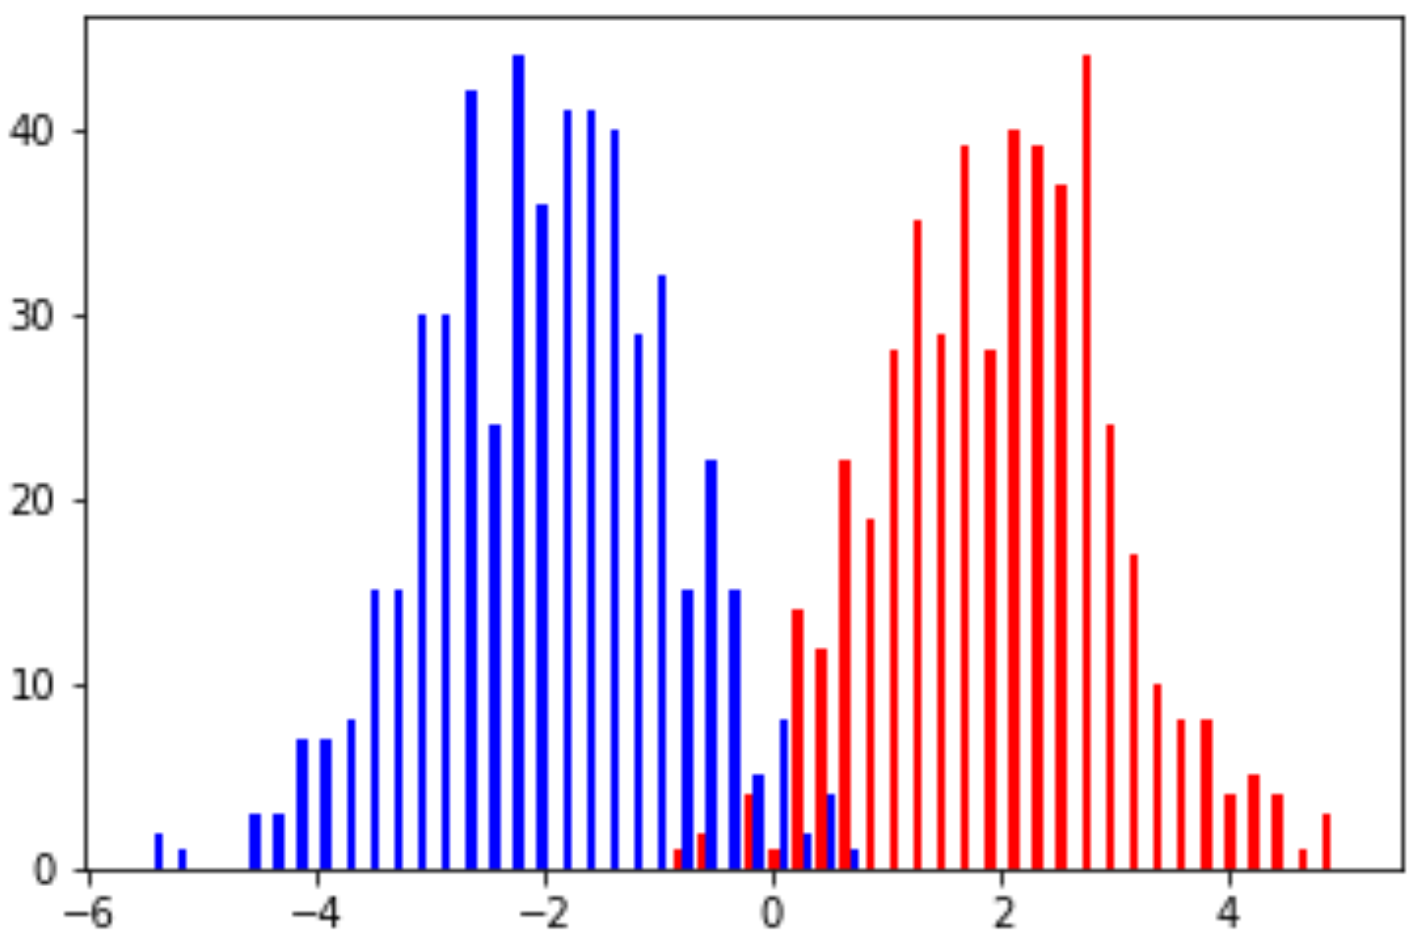 The empirical data distribution